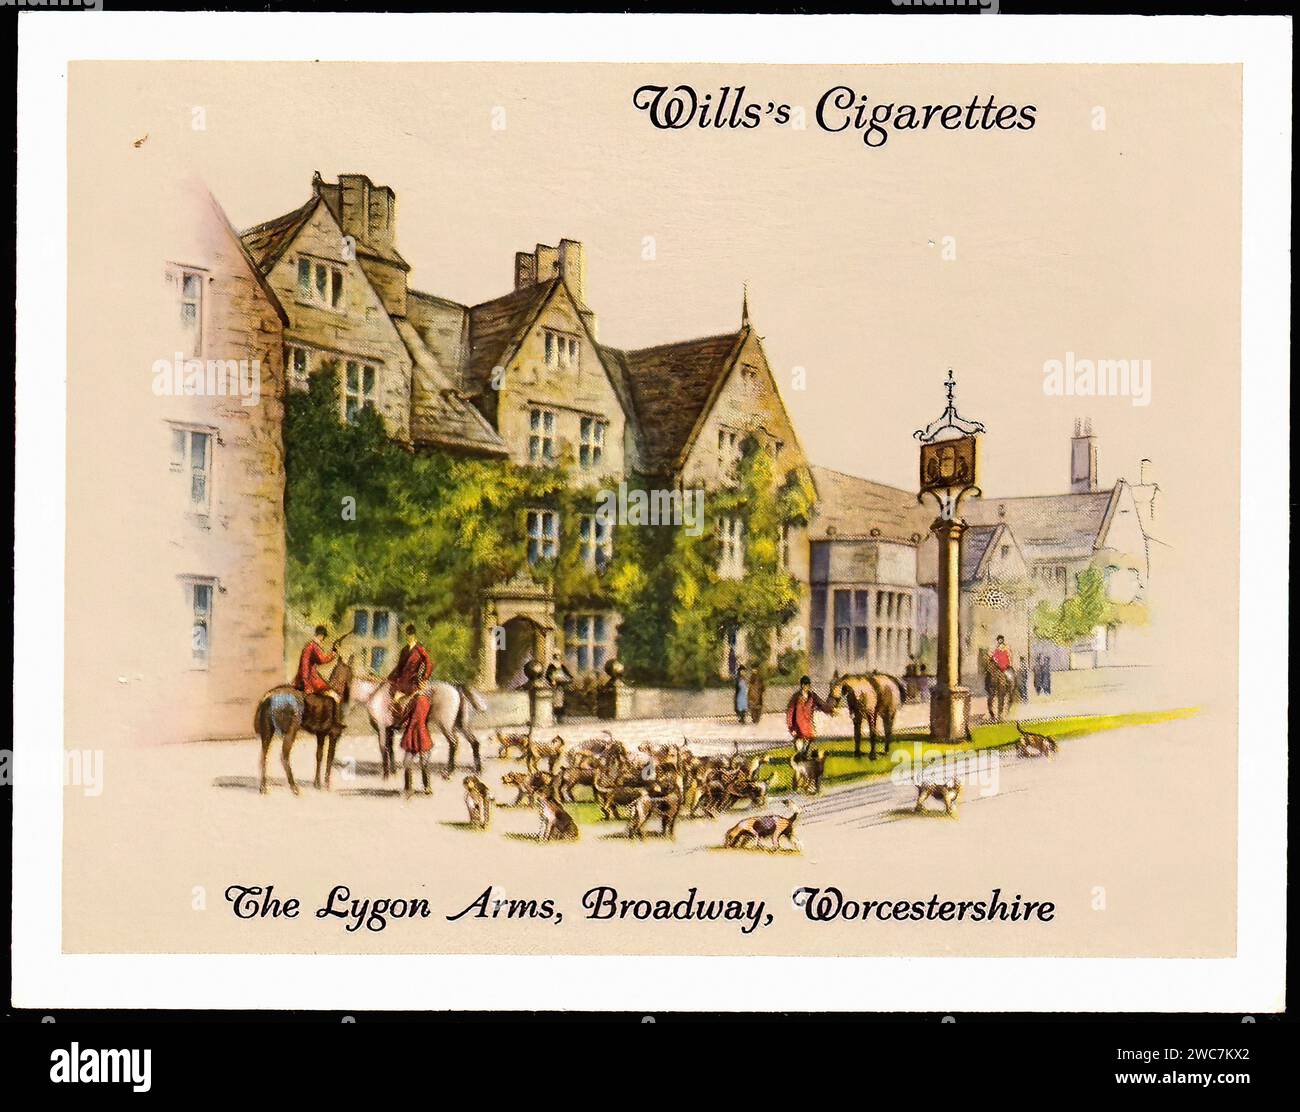 Lygon Arms, Broadway 001 - Vintage Cigarette Card Illustration Stock Photo